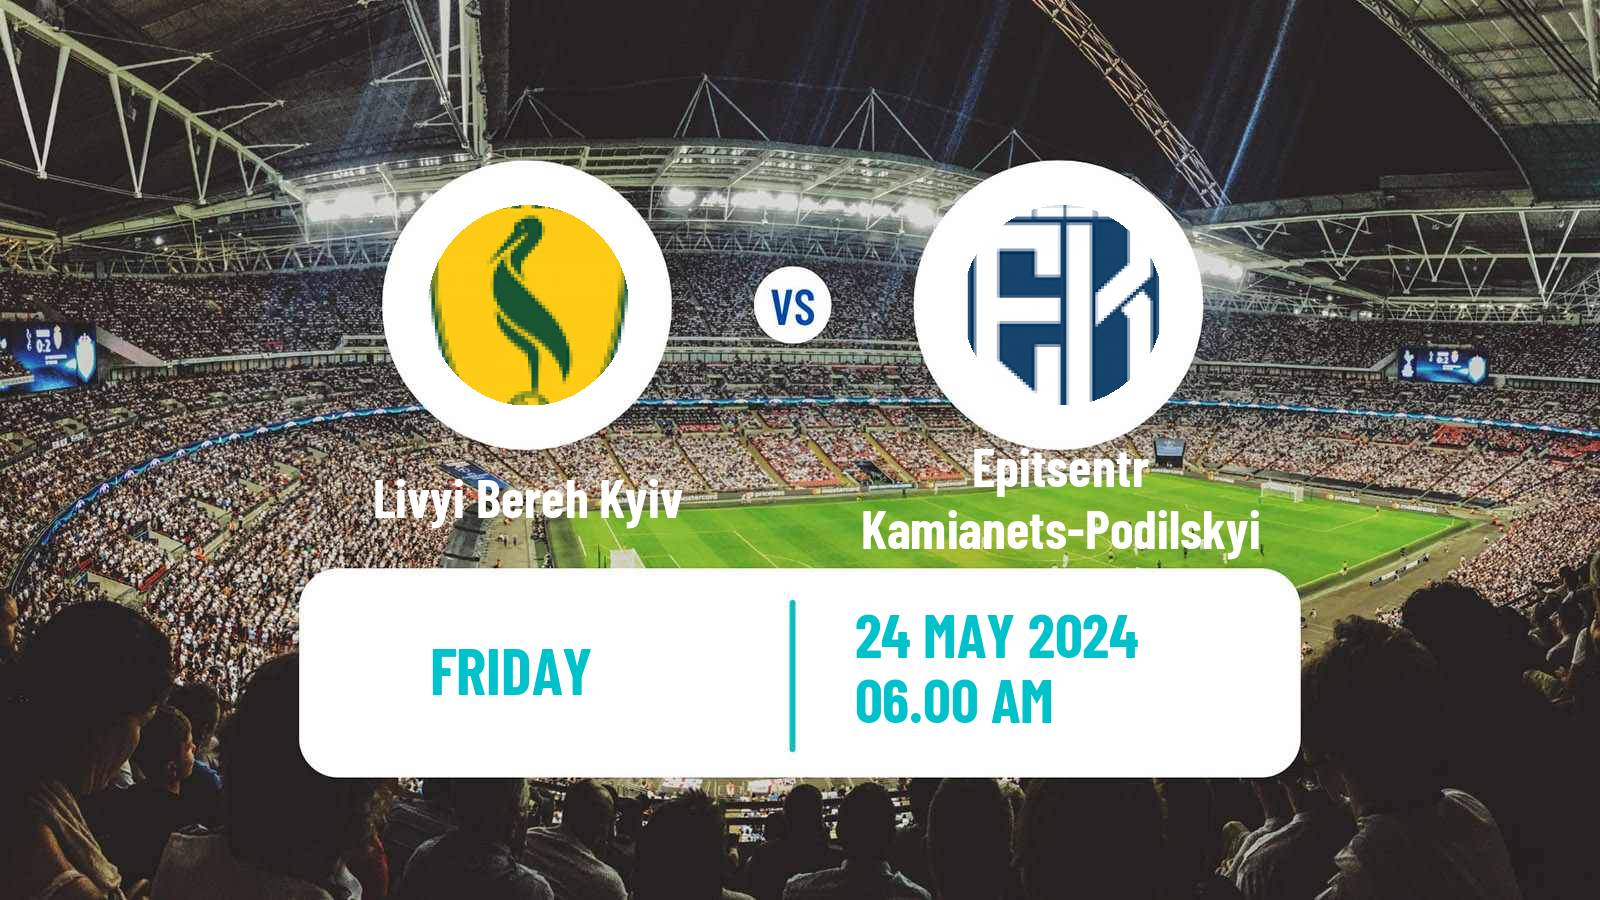 Soccer Ukrainian Persha Liga Livyi Bereh Kyiv - Epitsentr Kamianets-Podilskyi